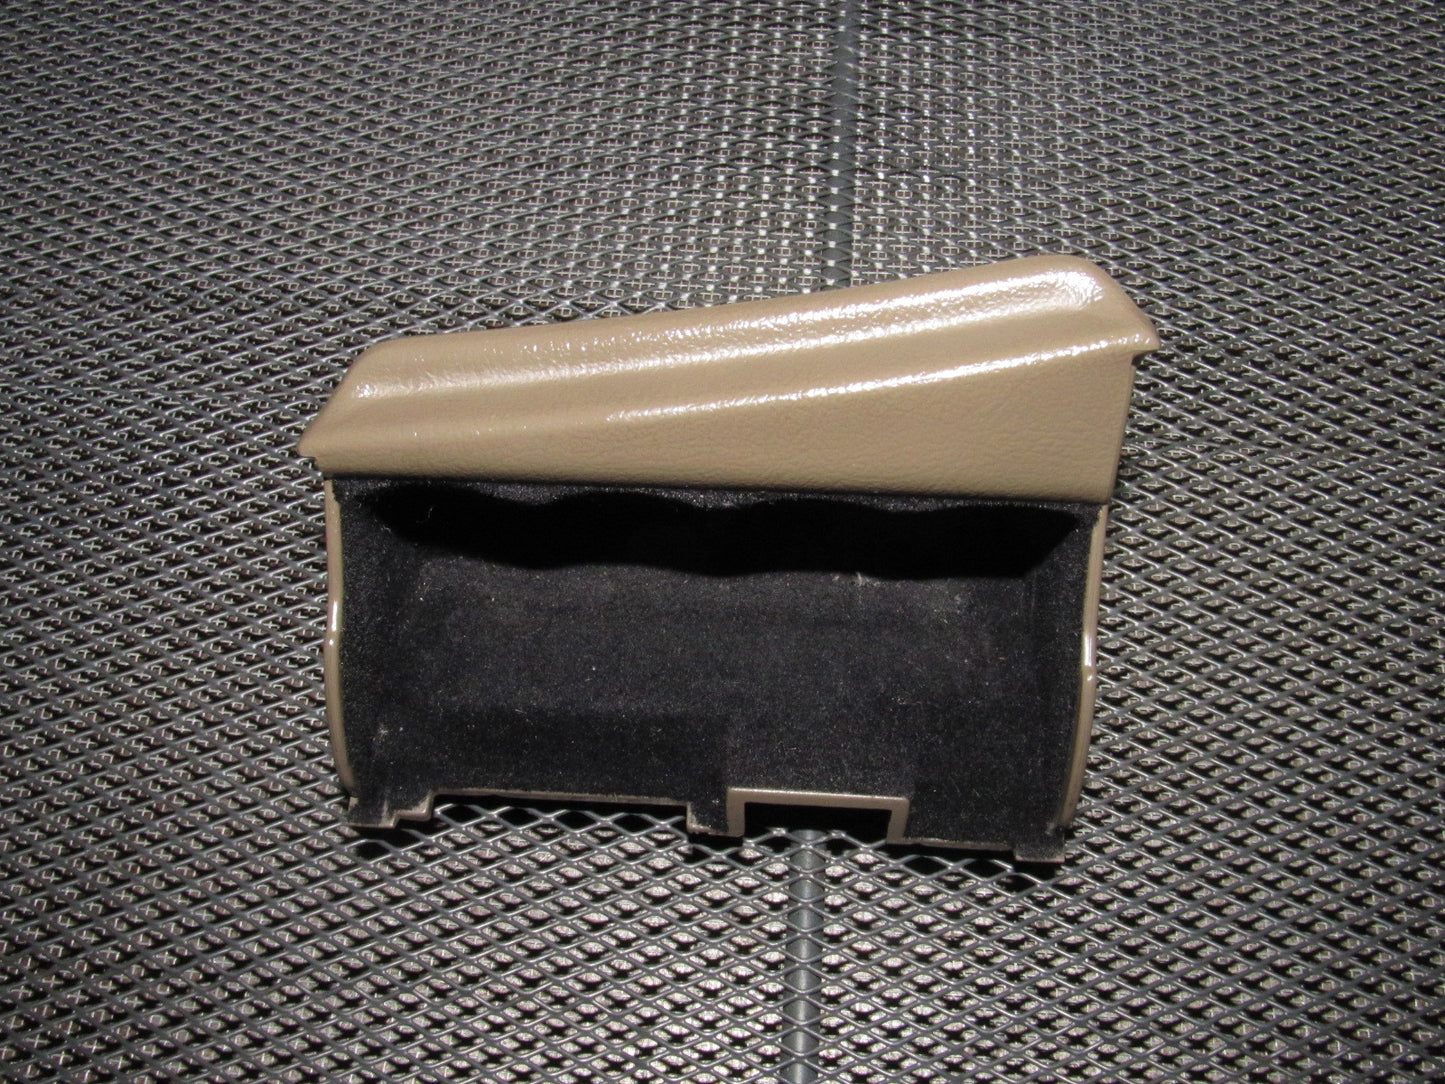 94-01 Acura Integra OEM Dash Coin Pouch